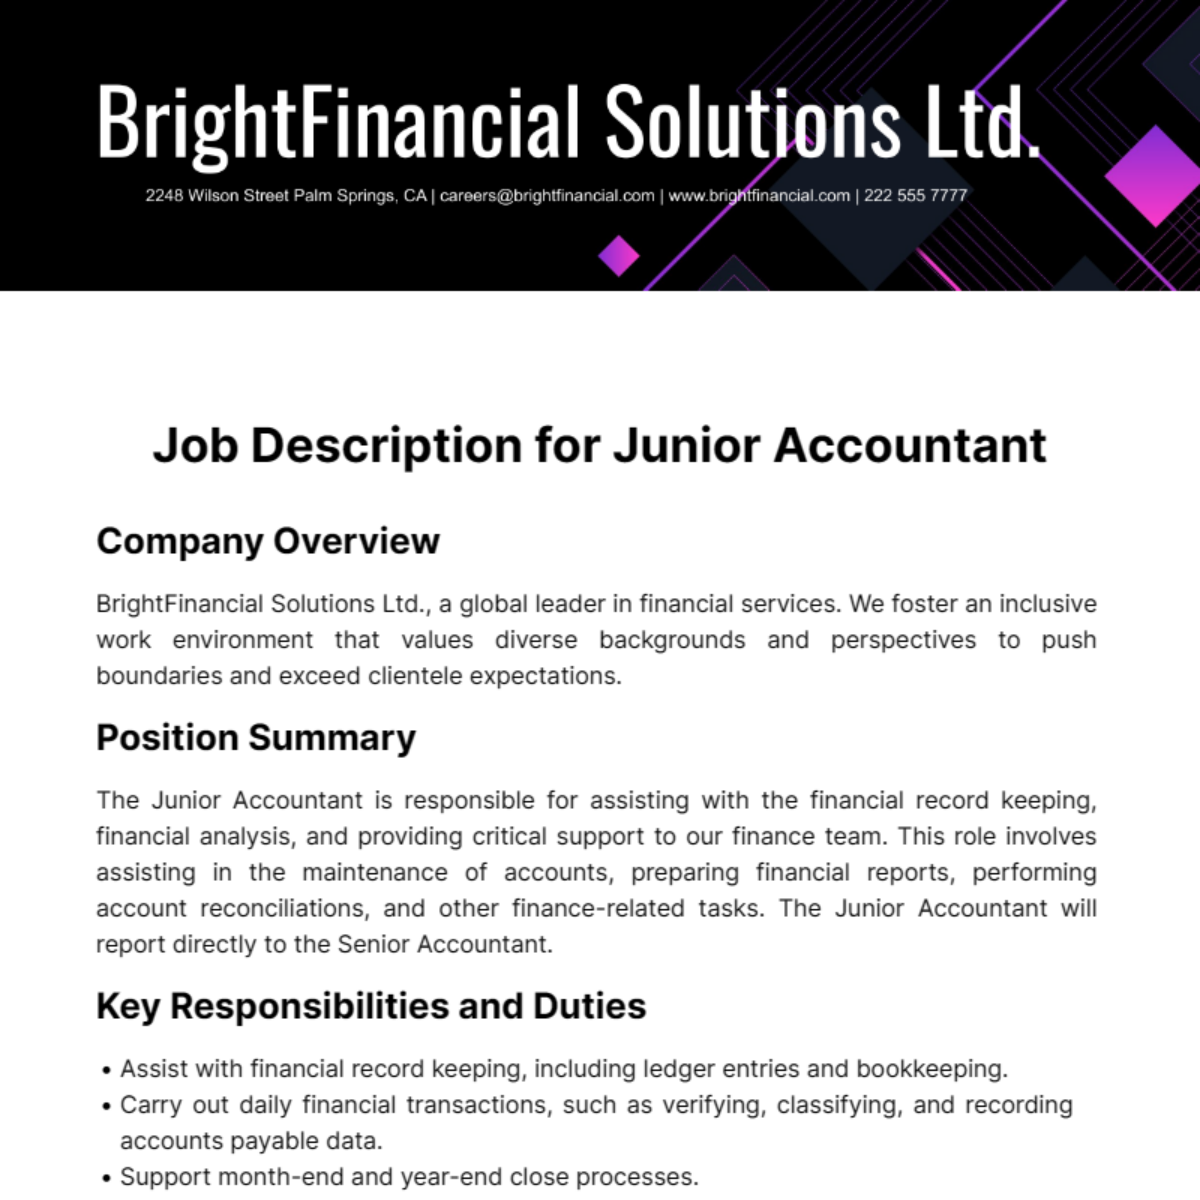 Job Description for Junior Accountant Template